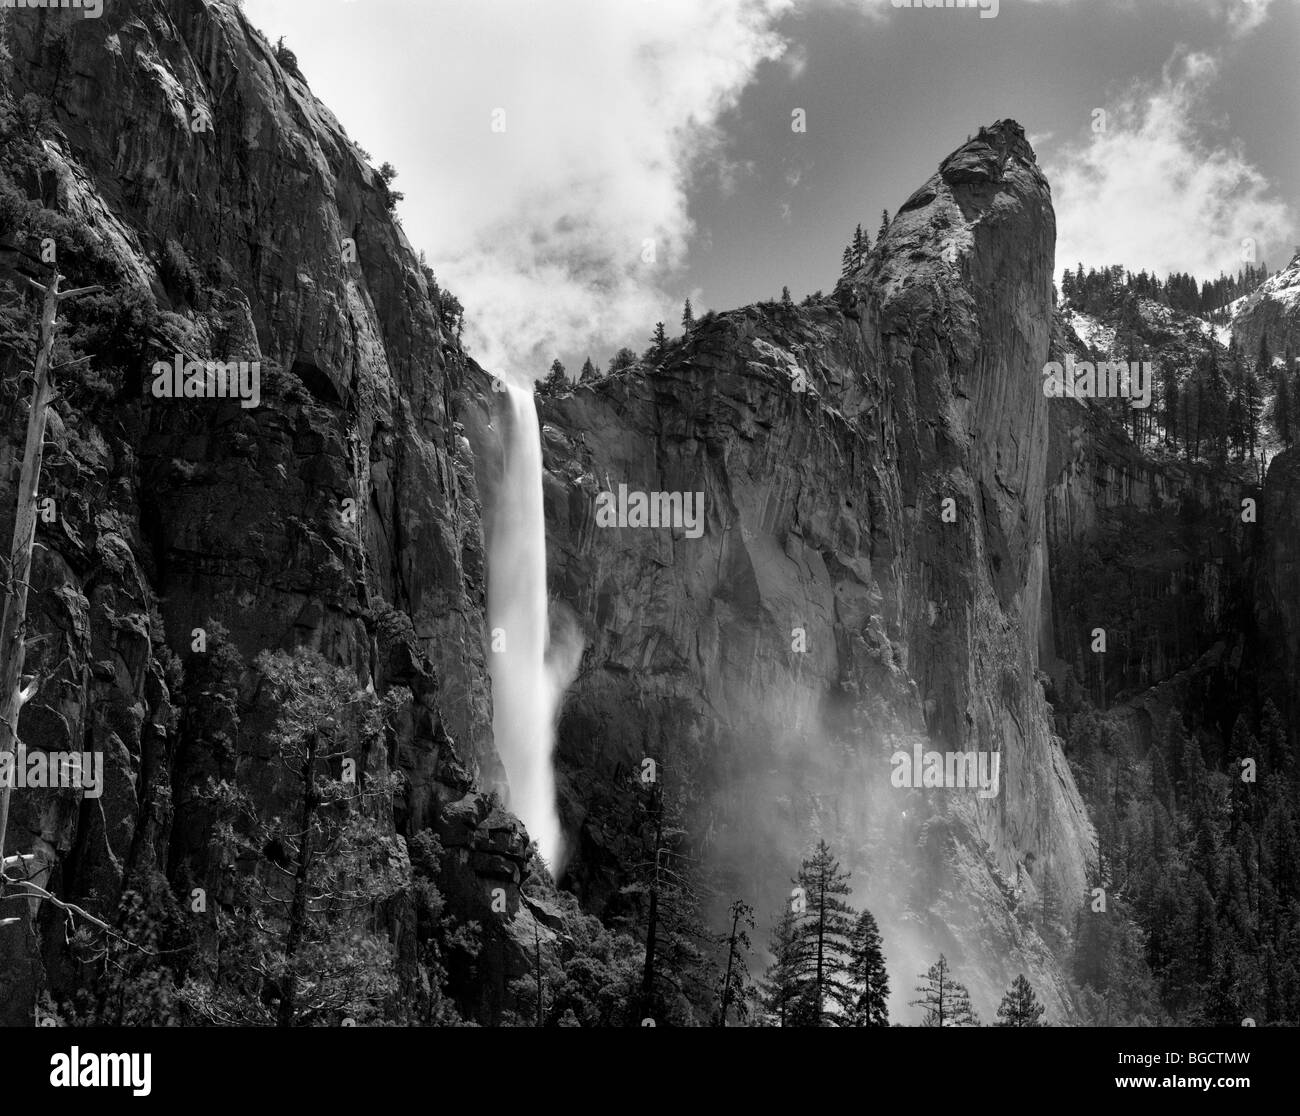 CALIFORNIA - Bridalveil Falls in Yosemite National Park. Stock Photo